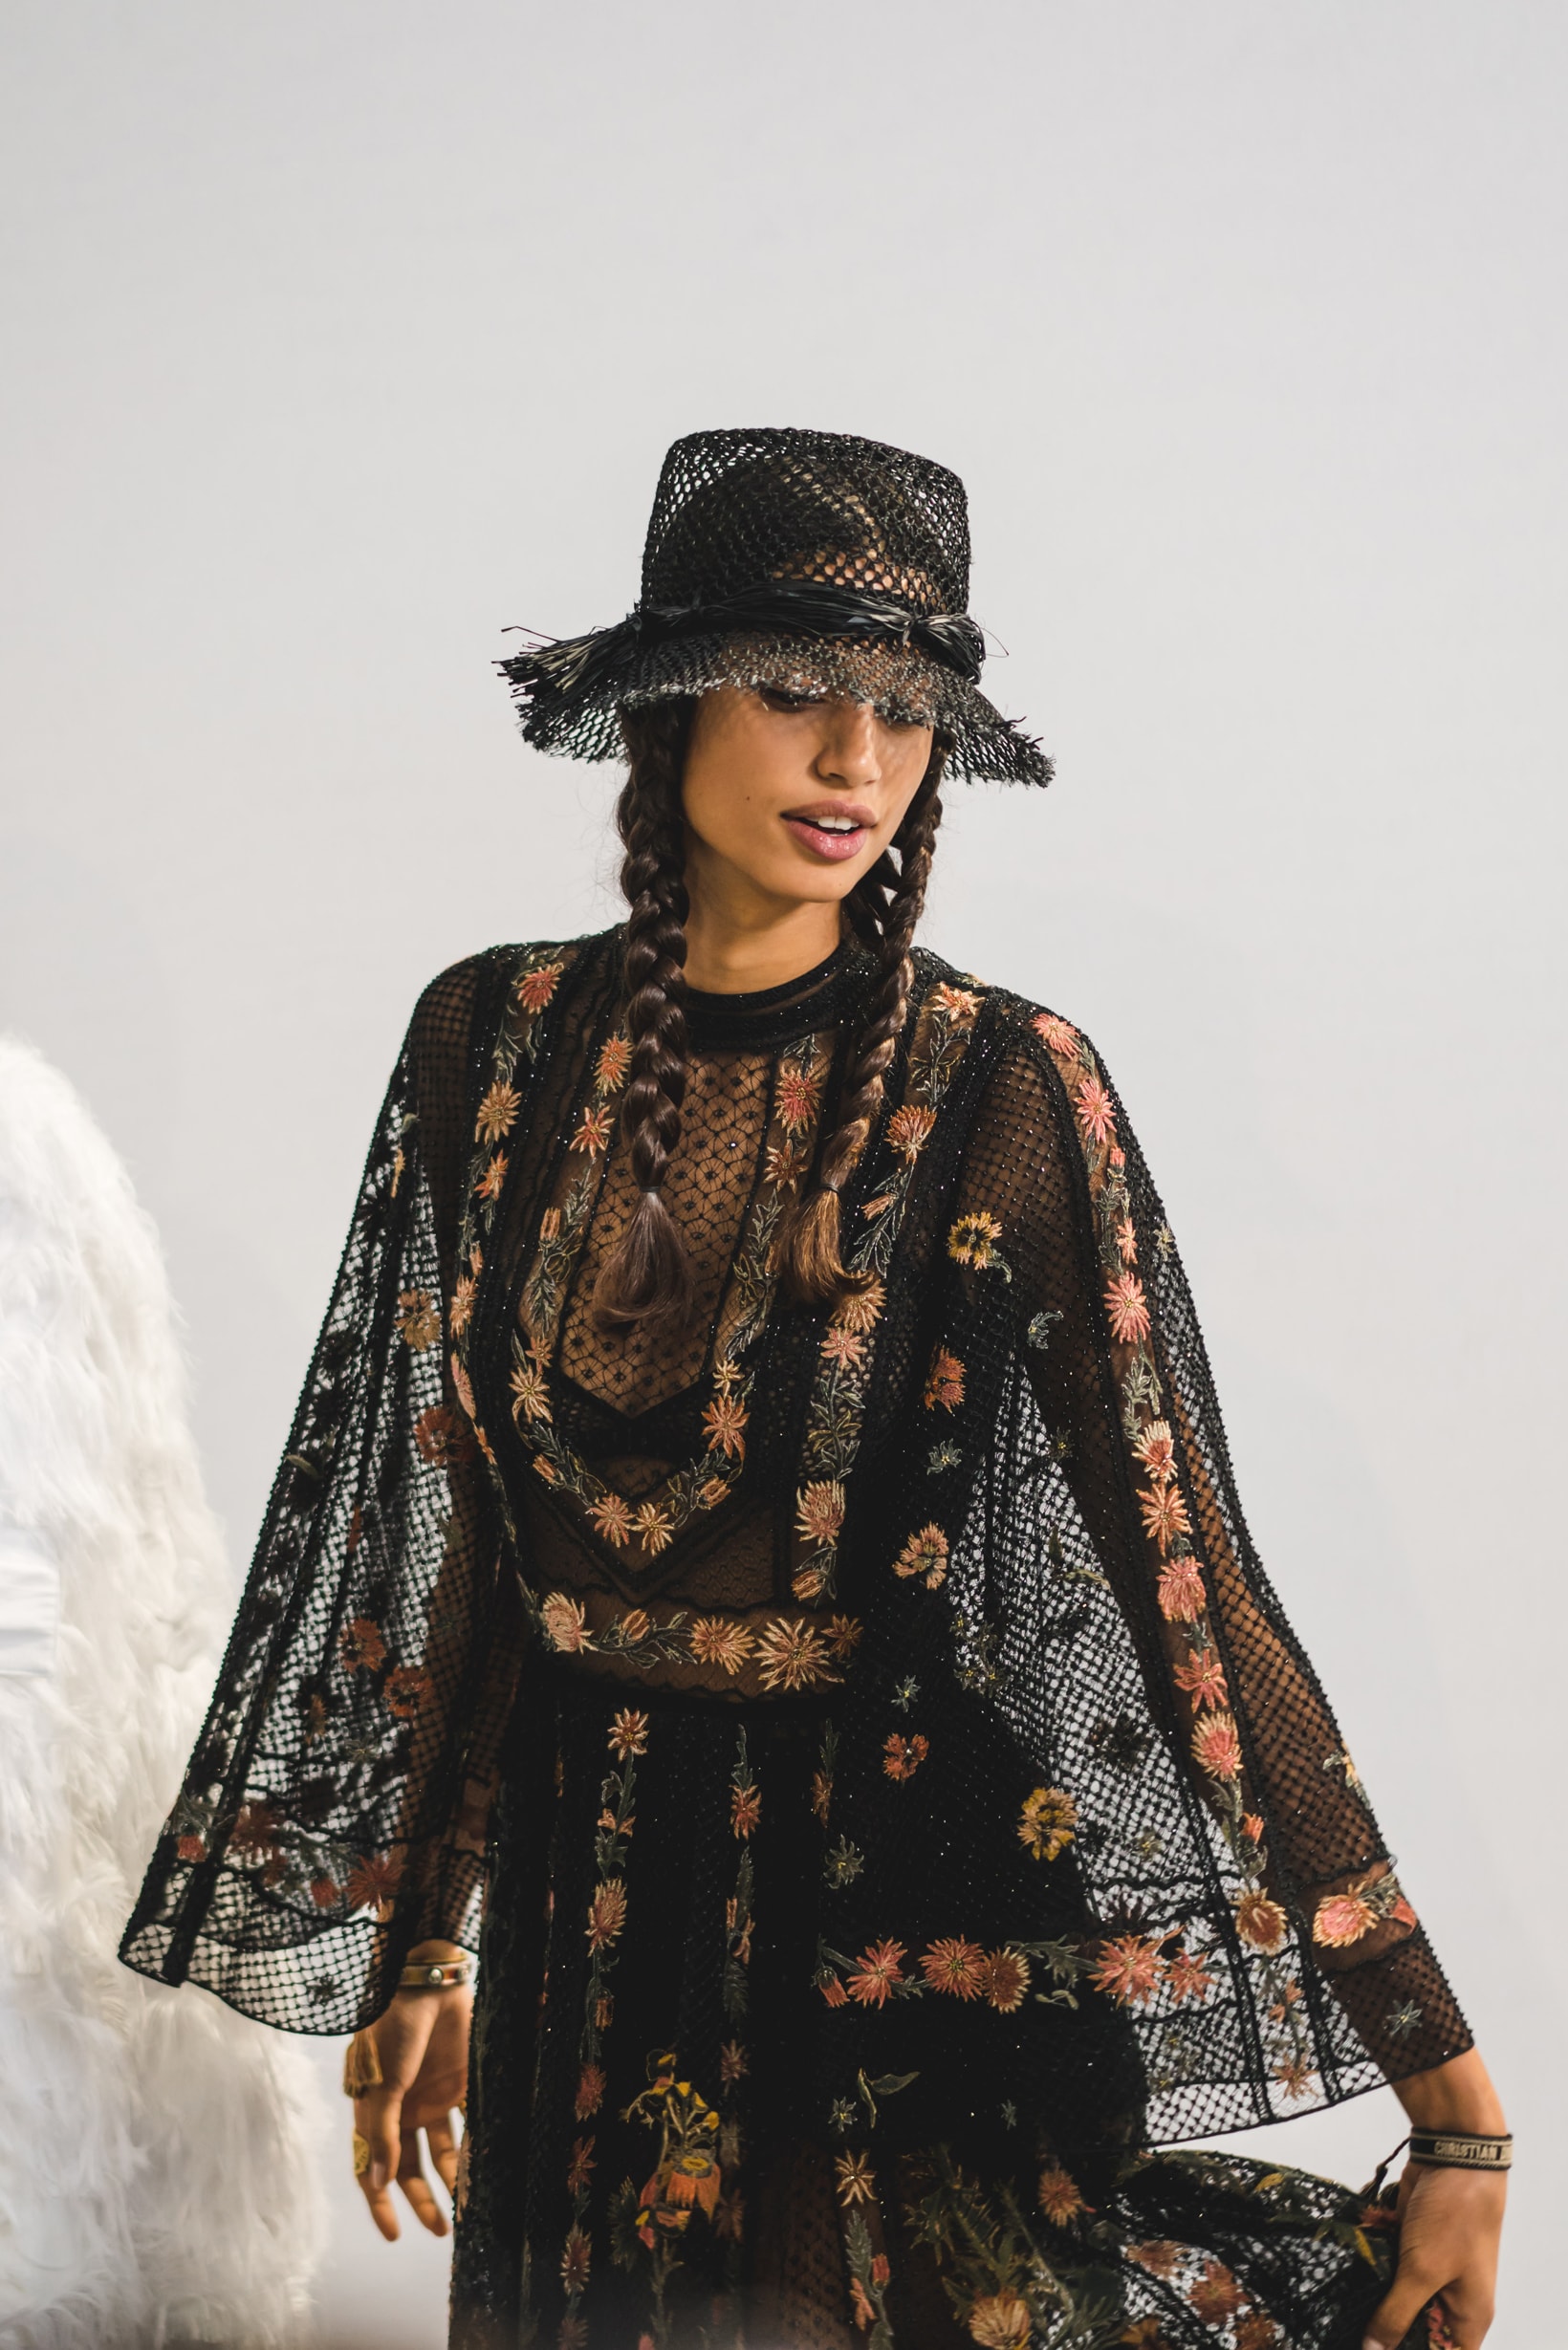 Dior Spring Summer 2020 Paris Fashion Week Collection Show Backstage Look Dress Hat Black